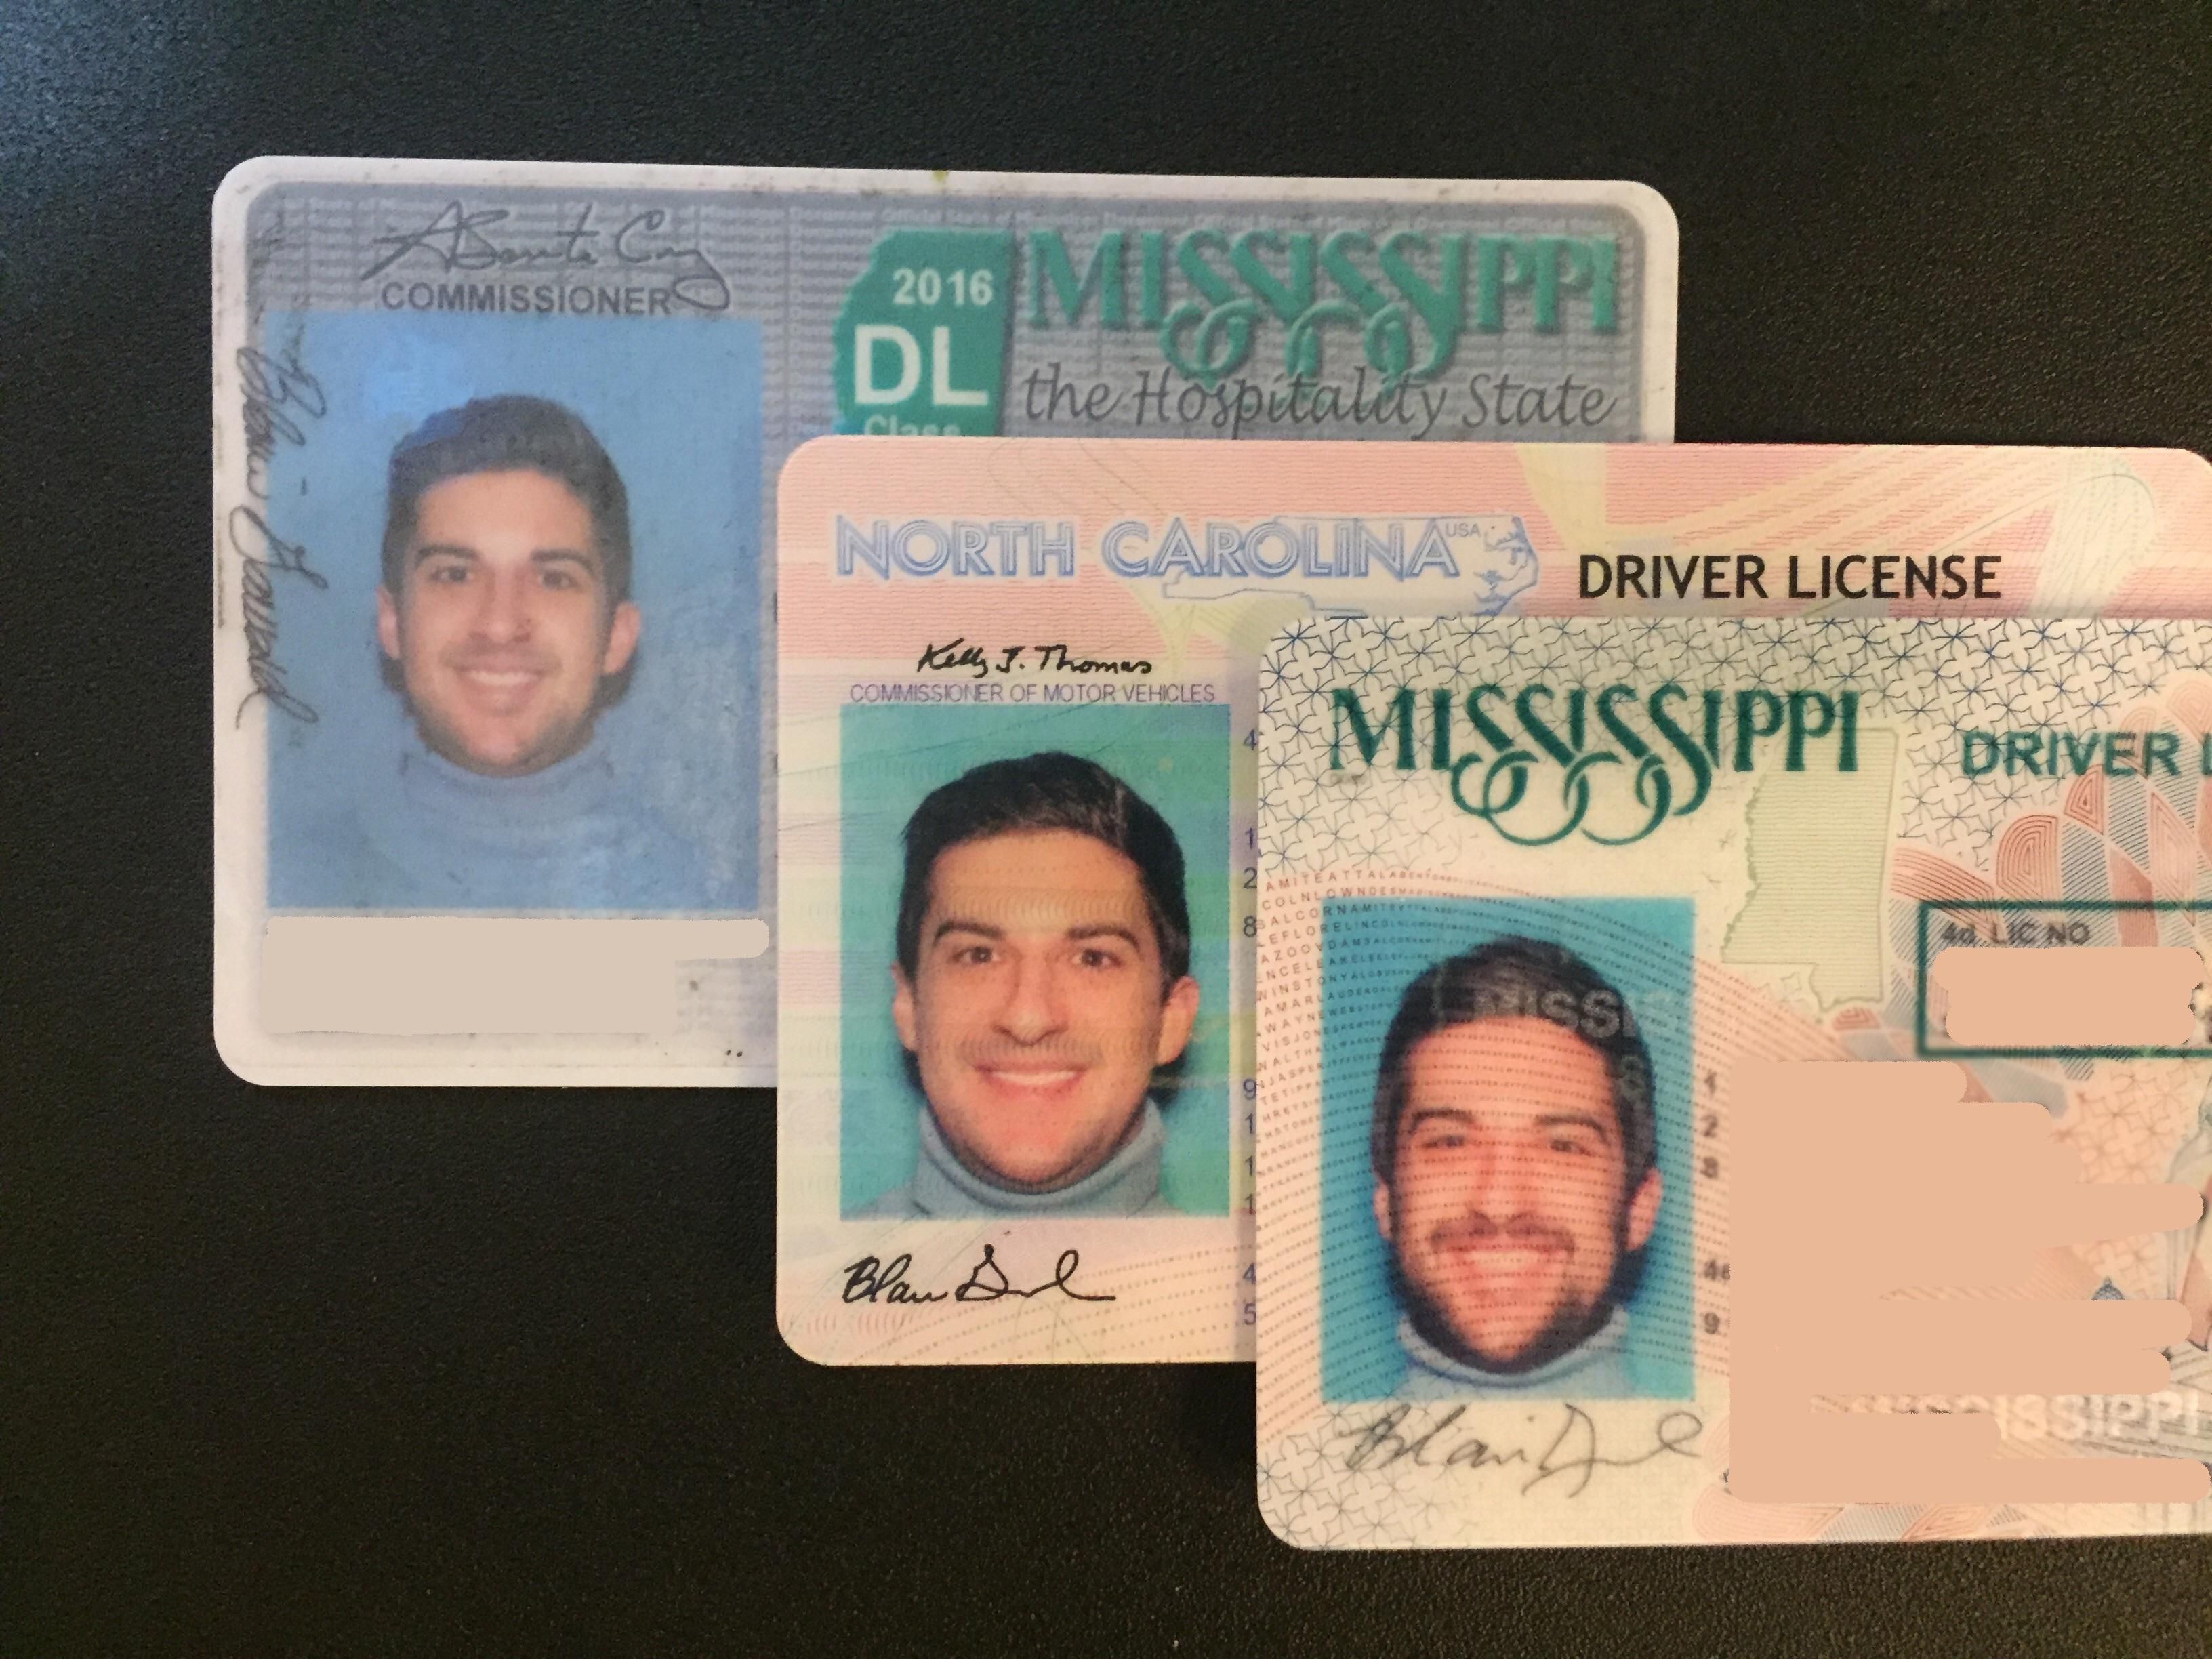 I've been wearing the same "DMV background blue" turtleneck for driver's license photos since 2011.